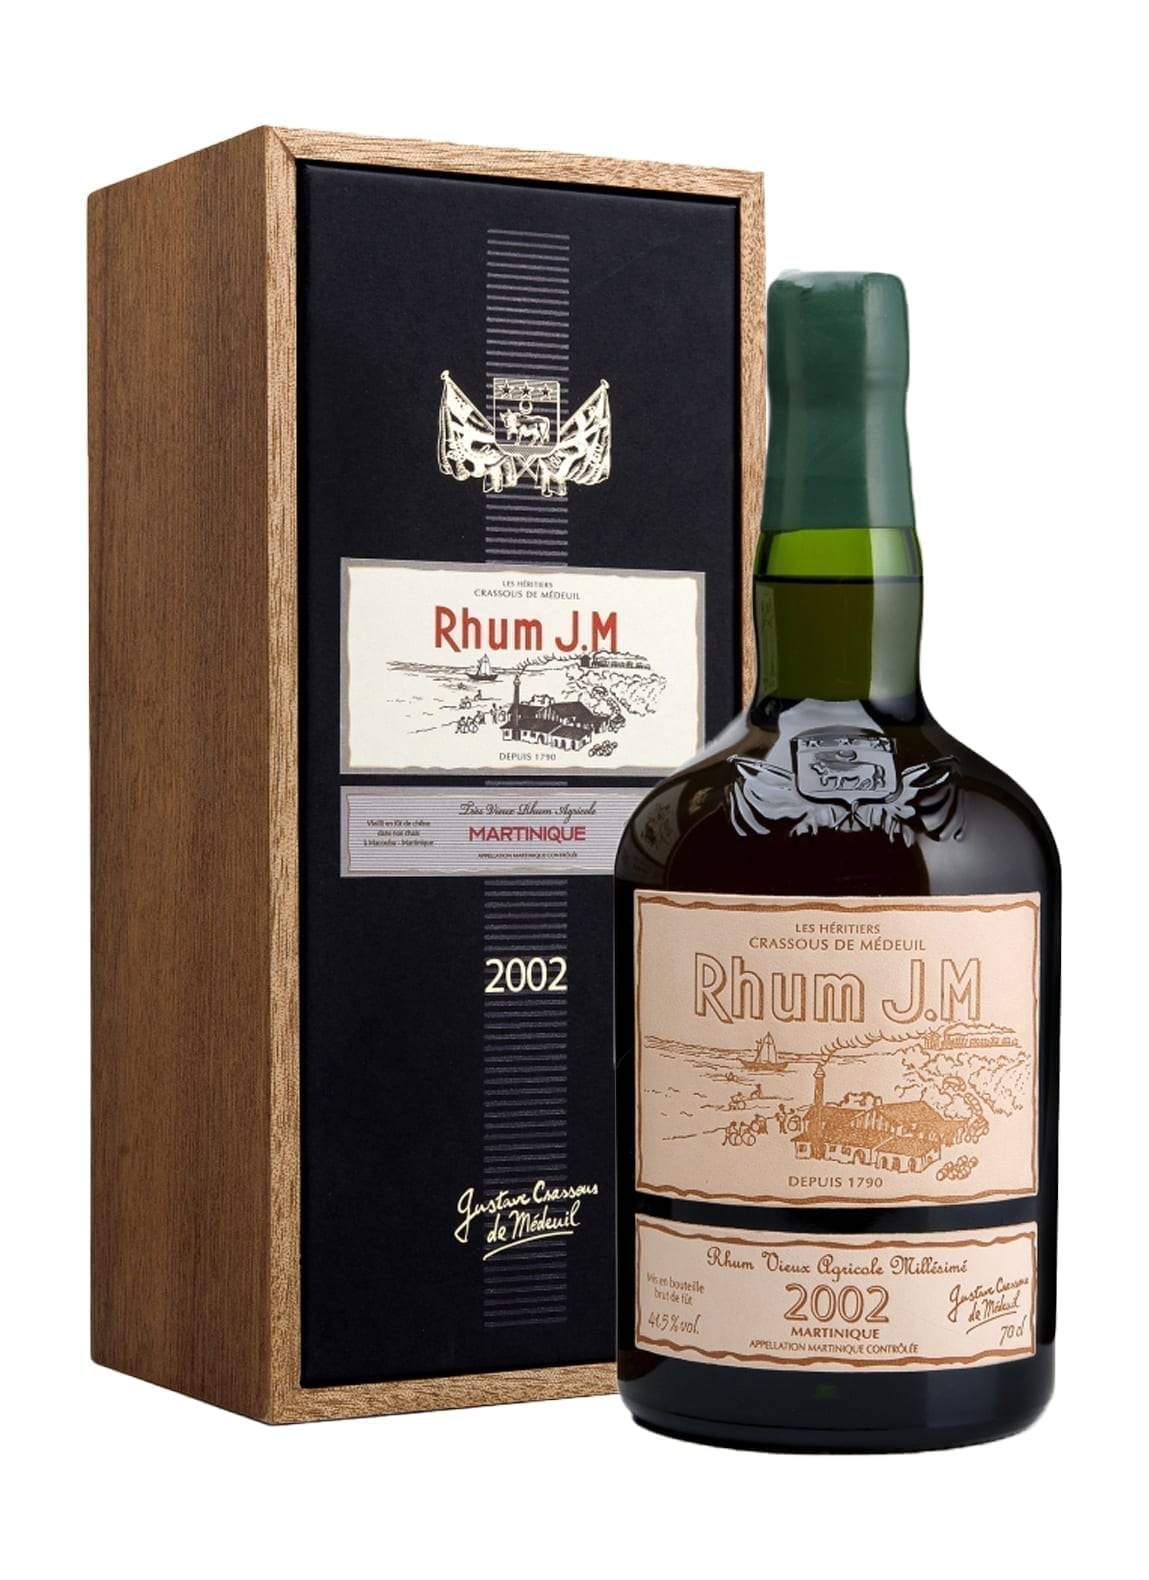 J.M Rhum Agricole 2002 Hors d'Age Bourbon Cask Finish 41.5% 700ml | Rum | Shop online at Spirits of France